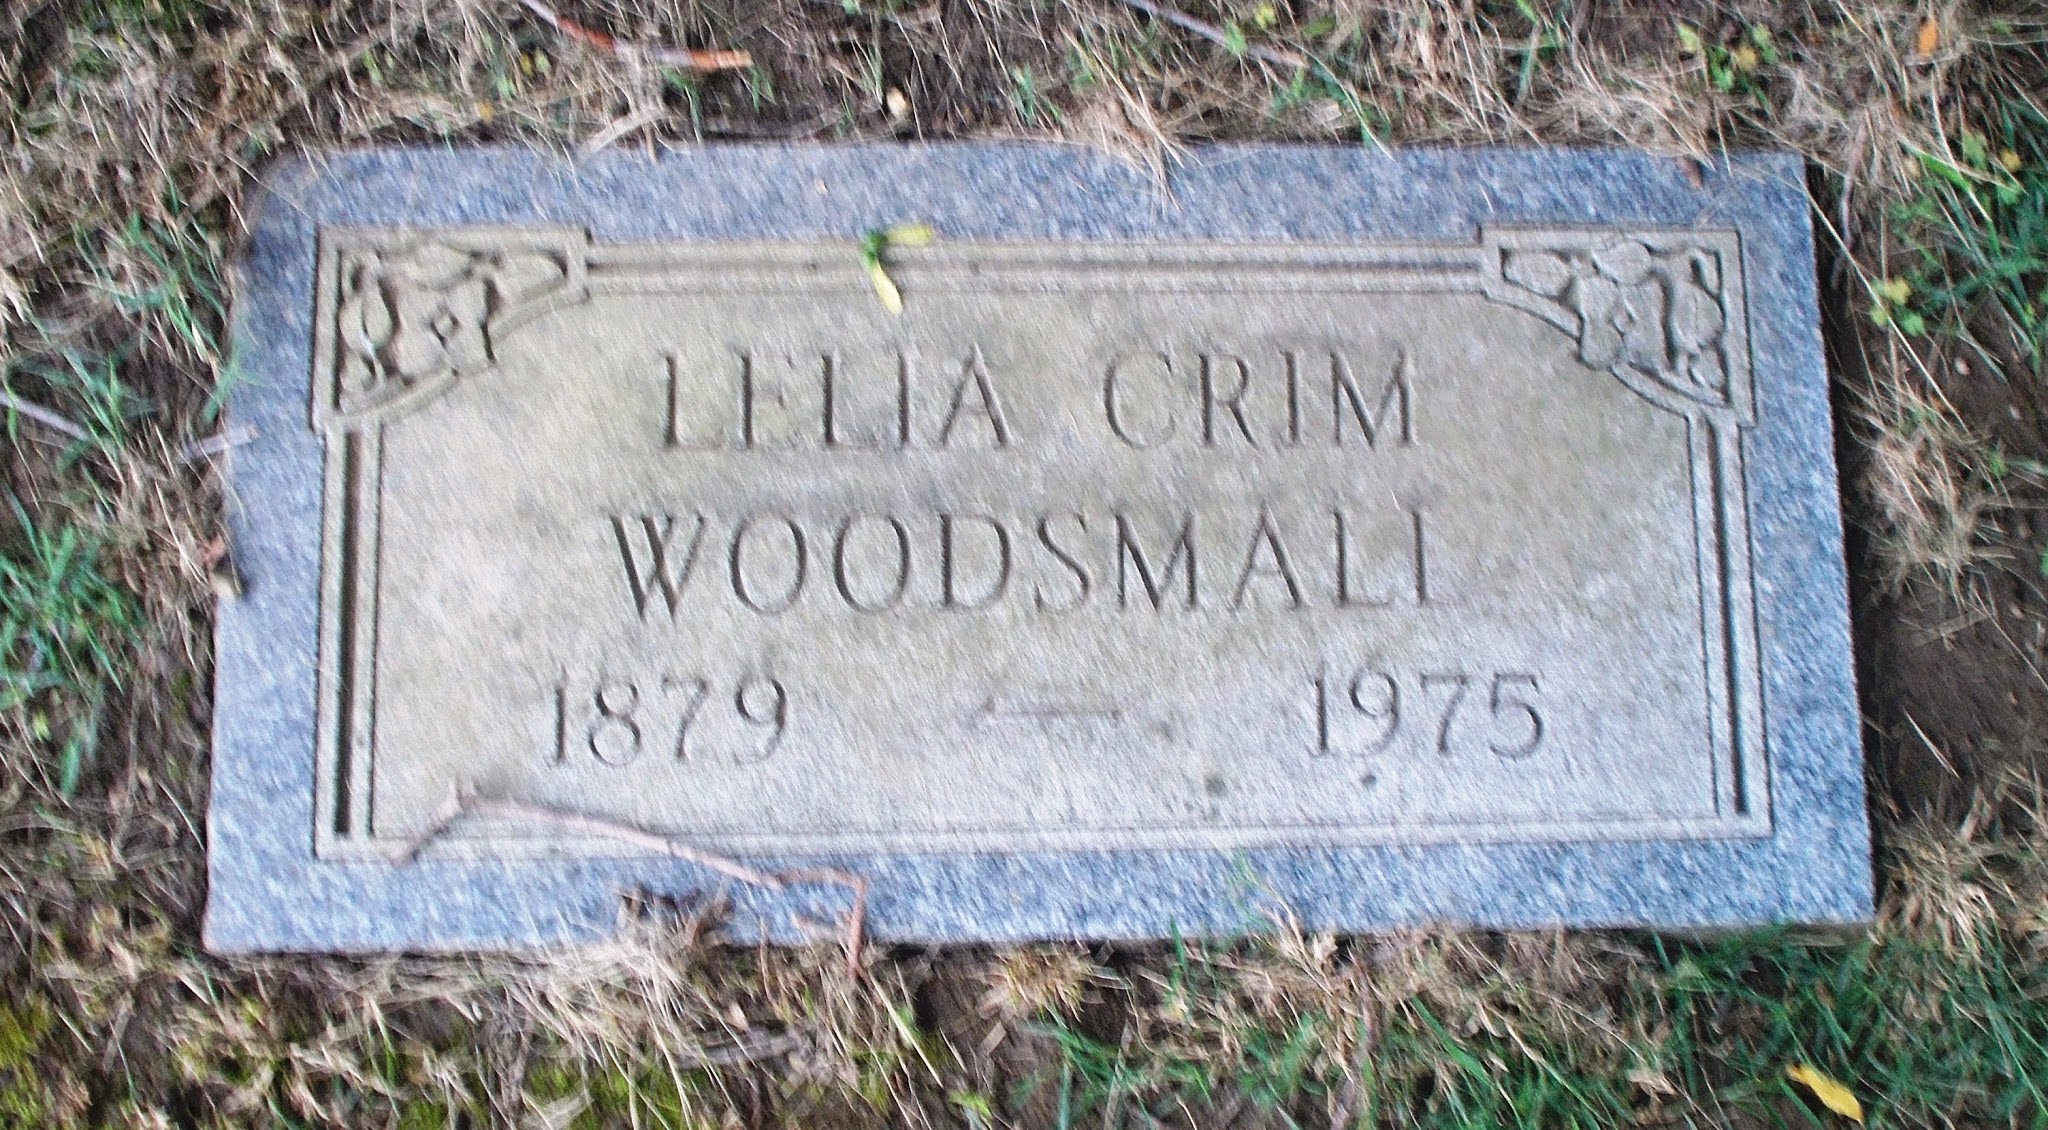 Lelia Crim Woodsmall